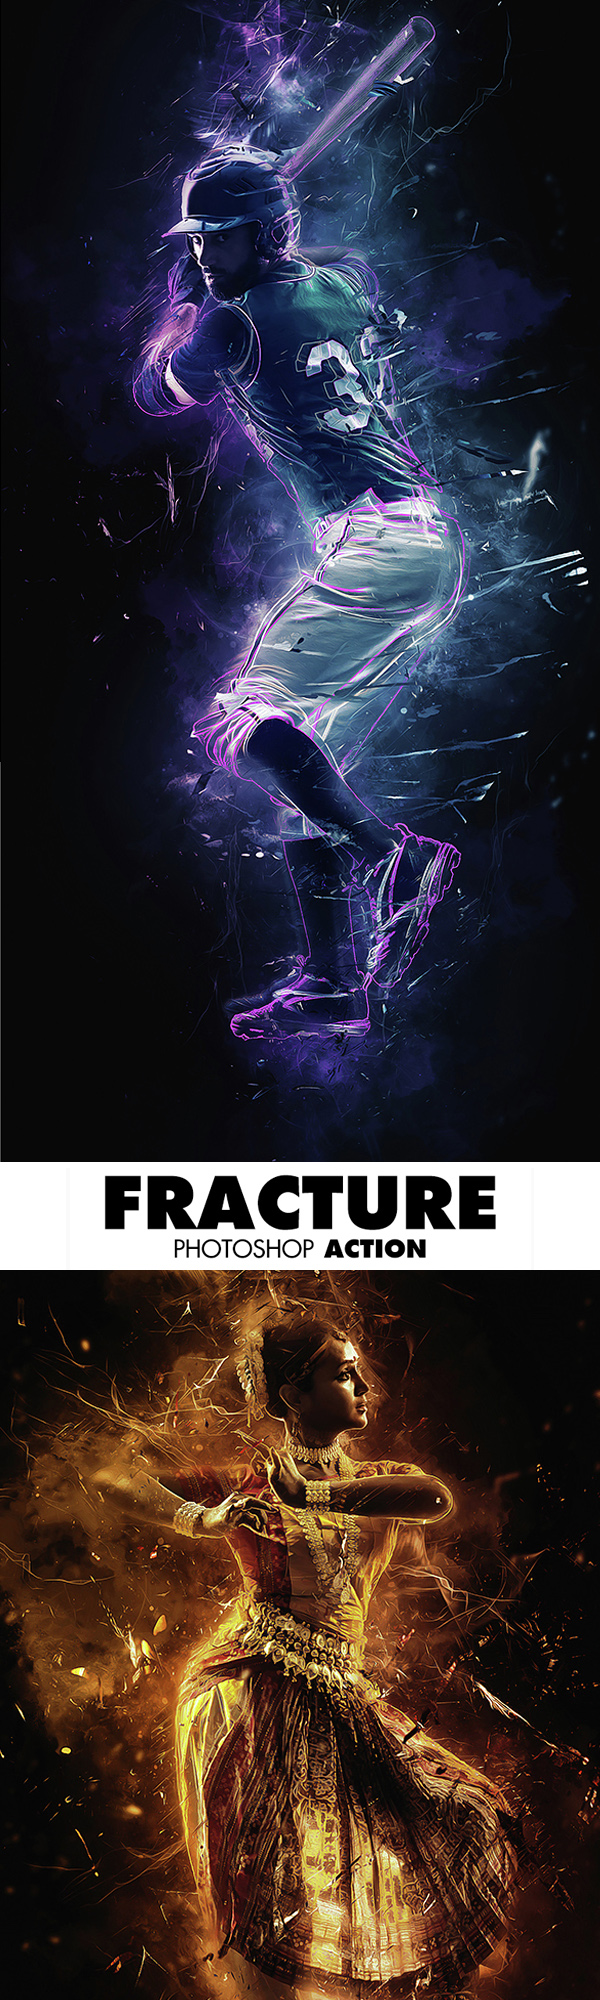 Fracture Photoshop Action